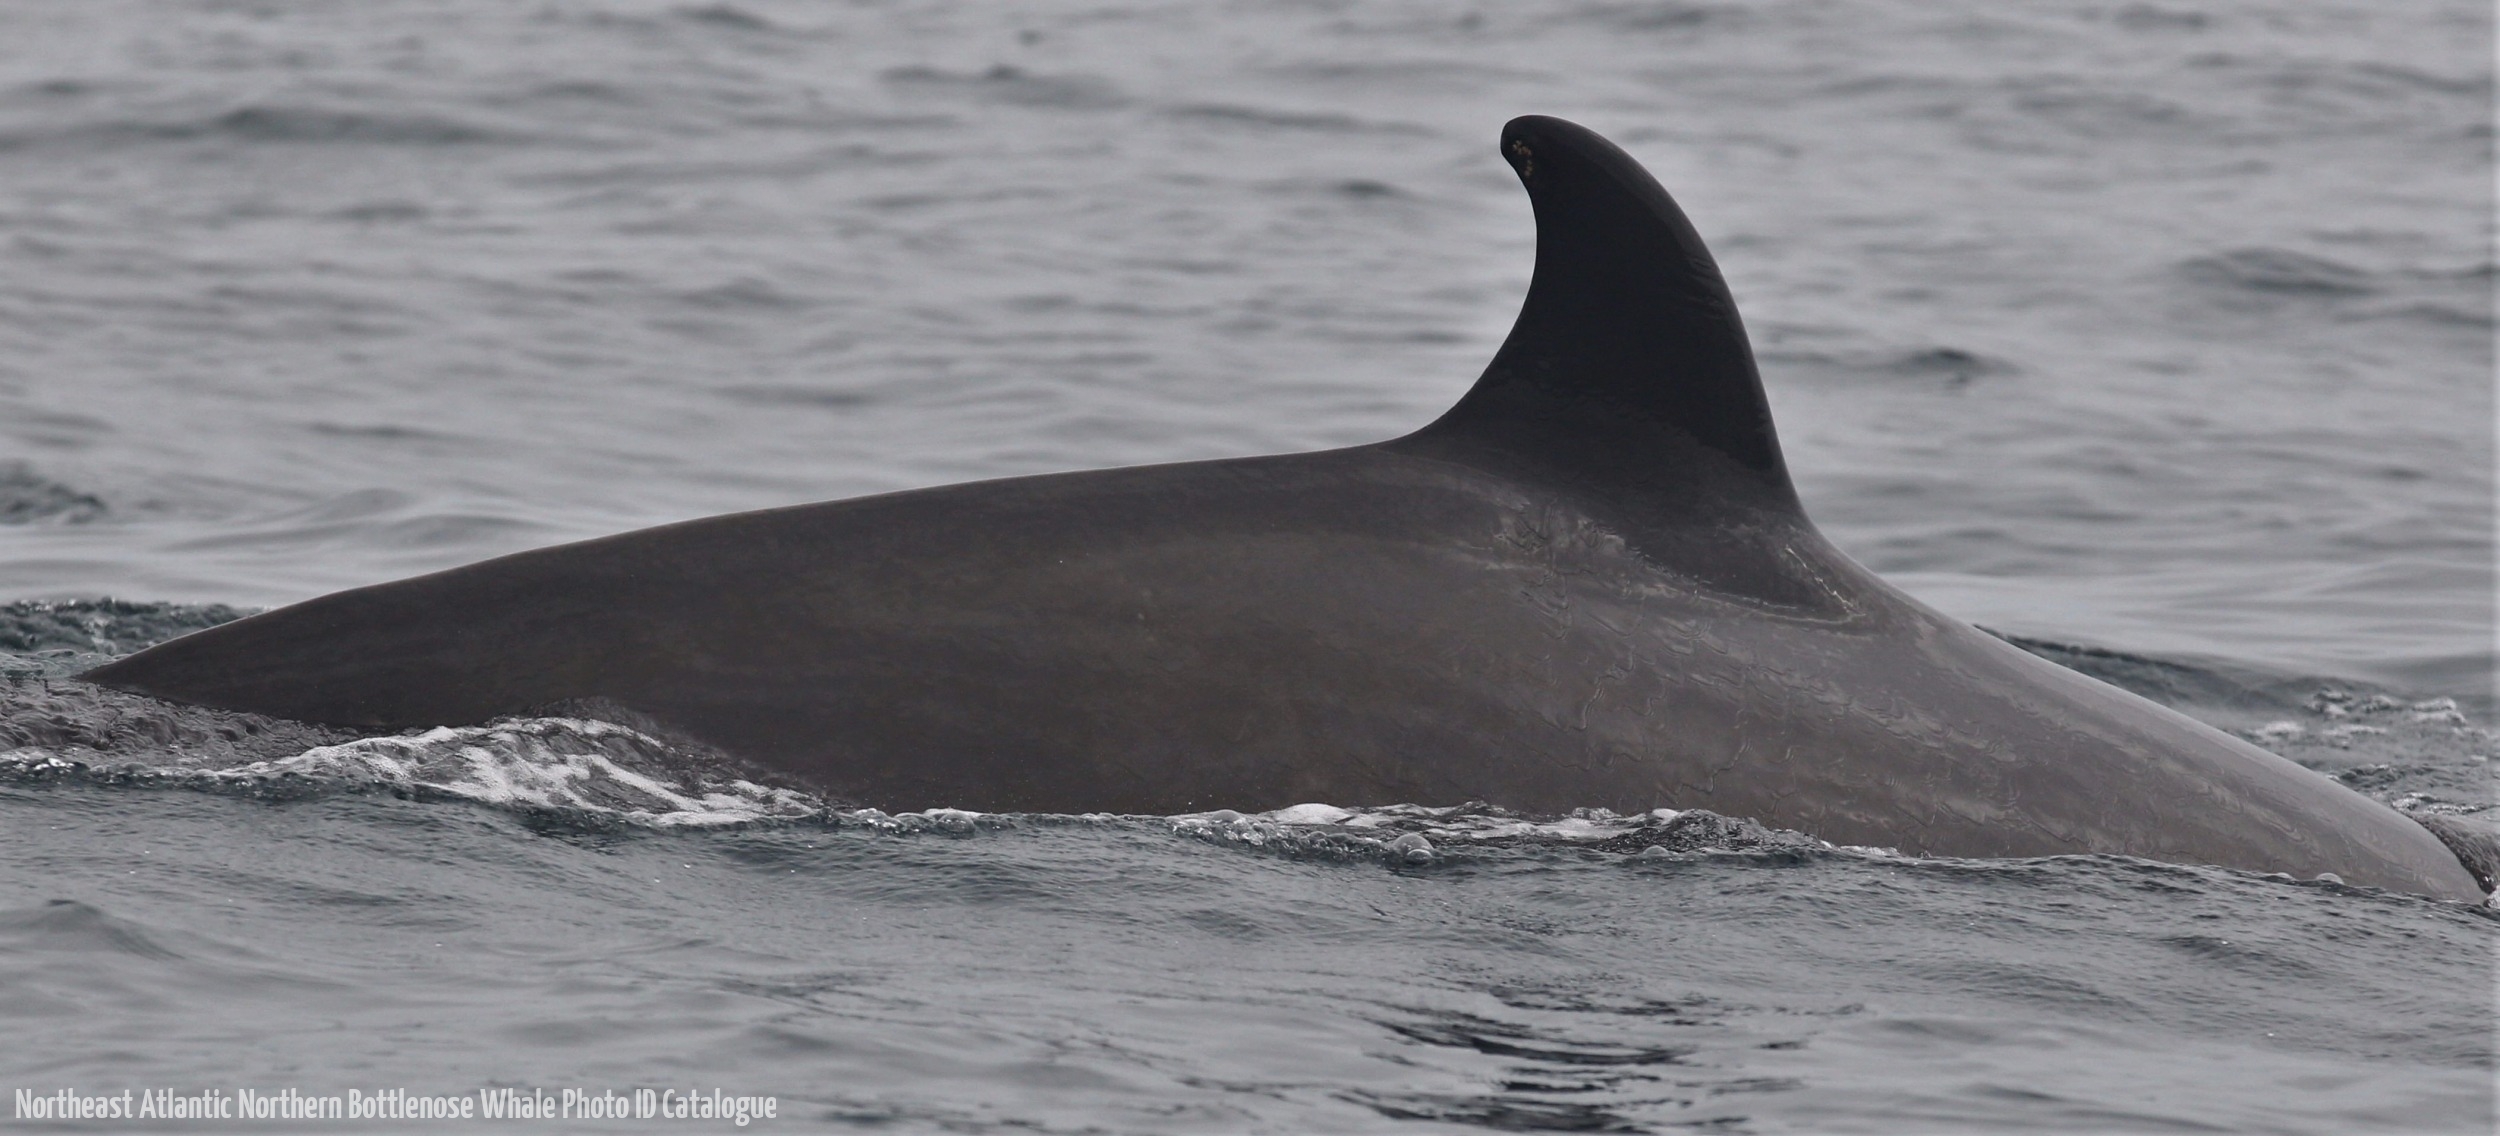 Whale ID: 0379,  Date taken: 21-06-2016,  Photographer: Lars Kleivane & Rune R. Hansen